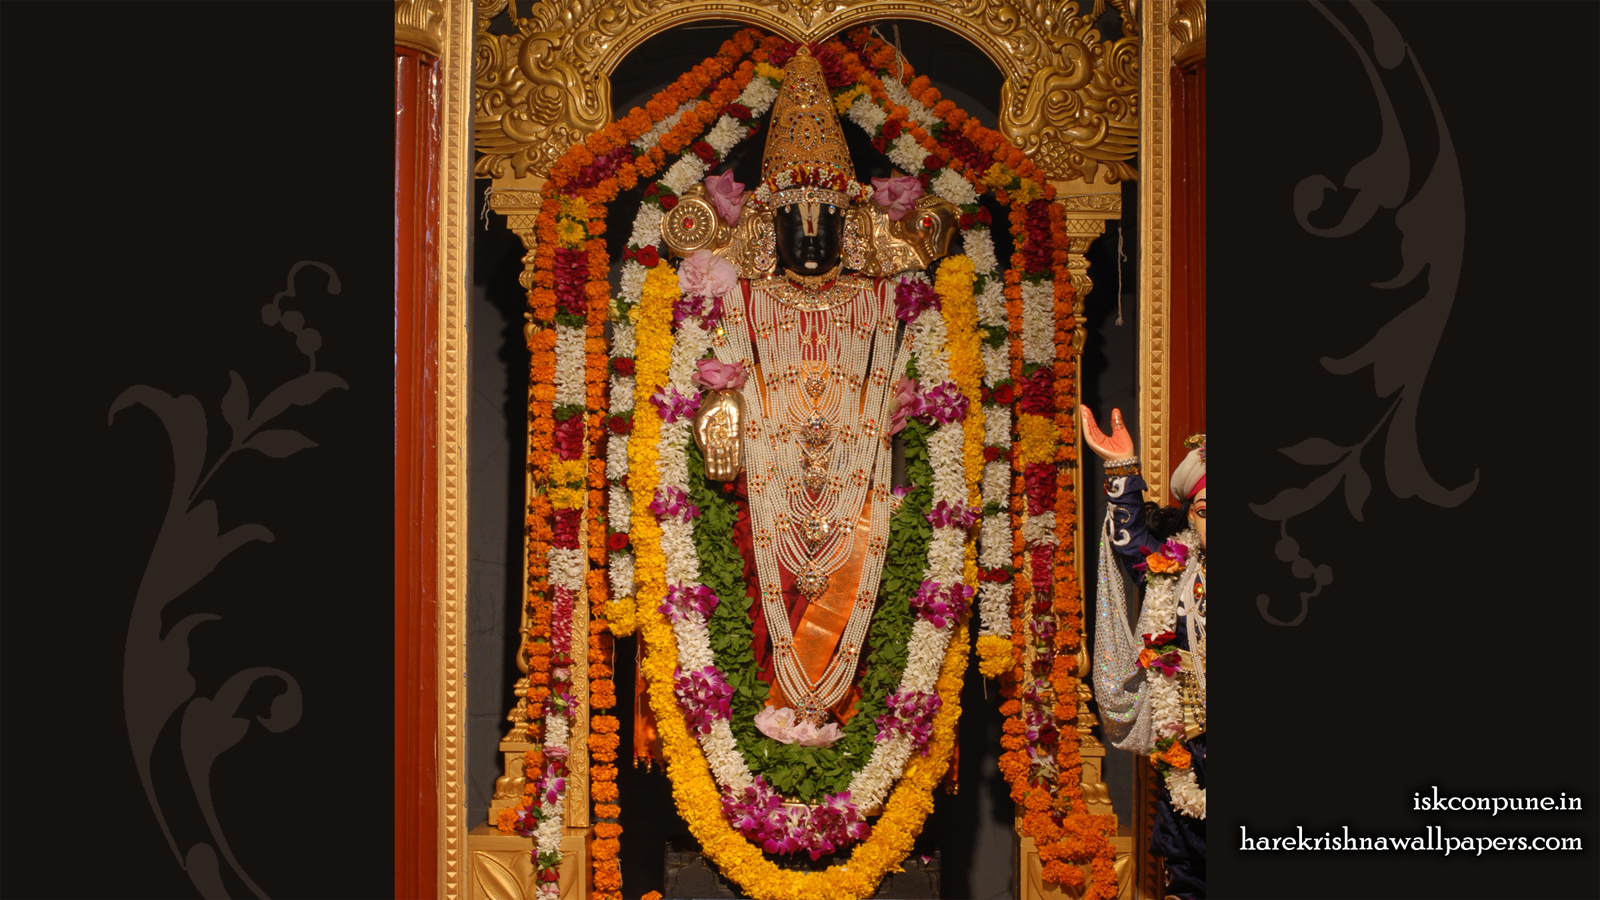 Sri Balaji Wallpaper (001) Size 1600×900 Download | Hare Krishna Wallpapers